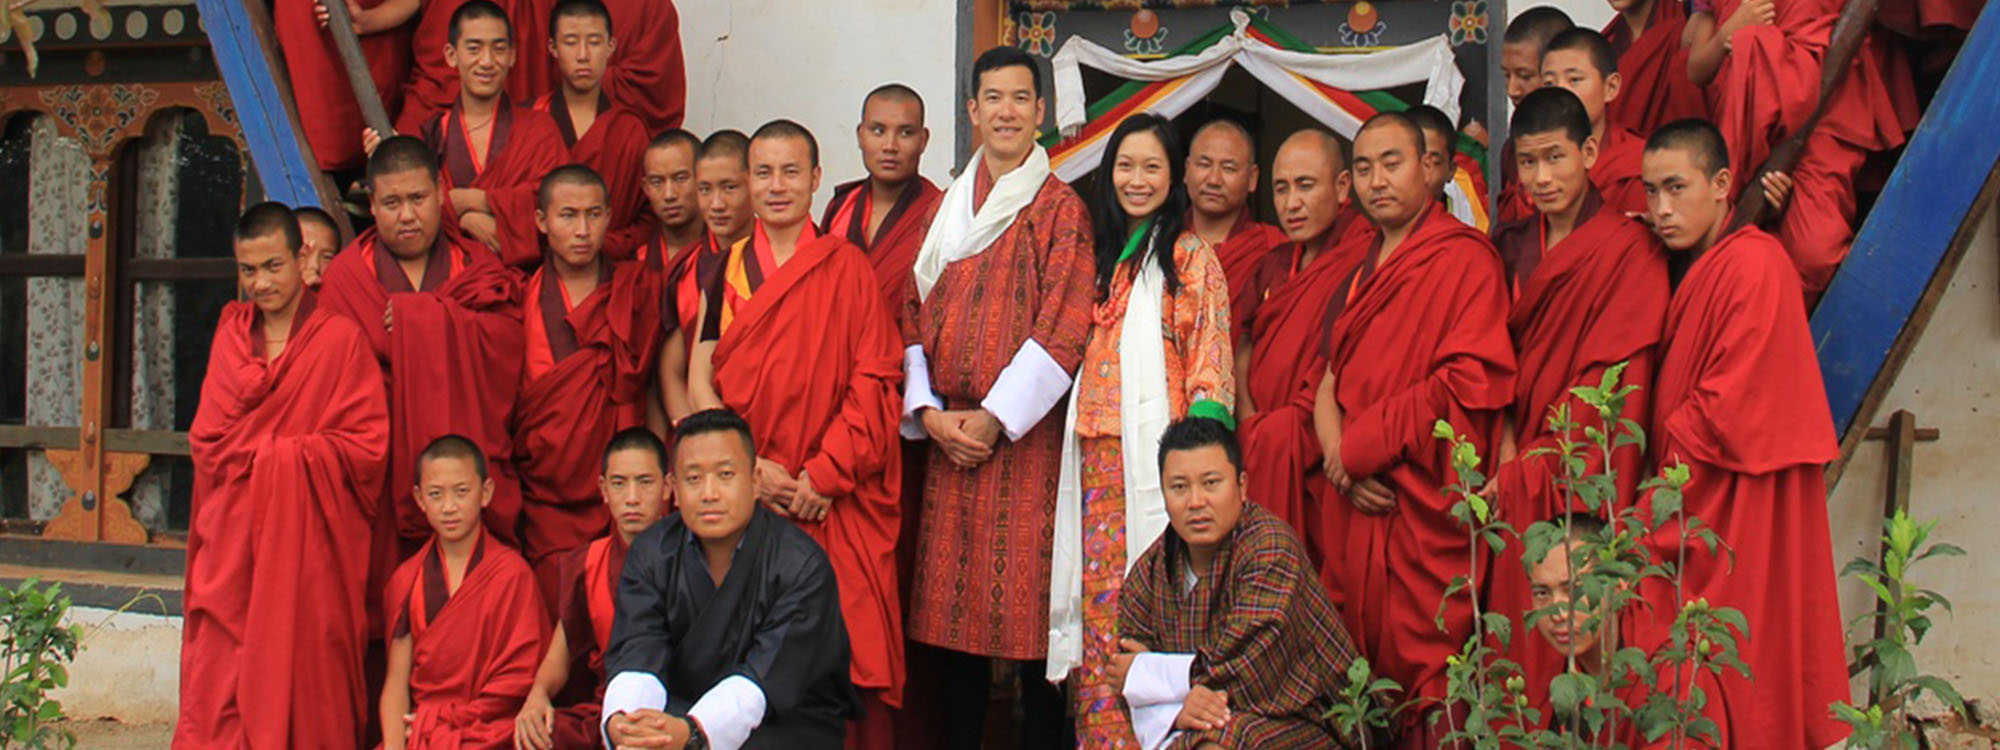 Bhutan Traditional Wedding – 6 Days Package